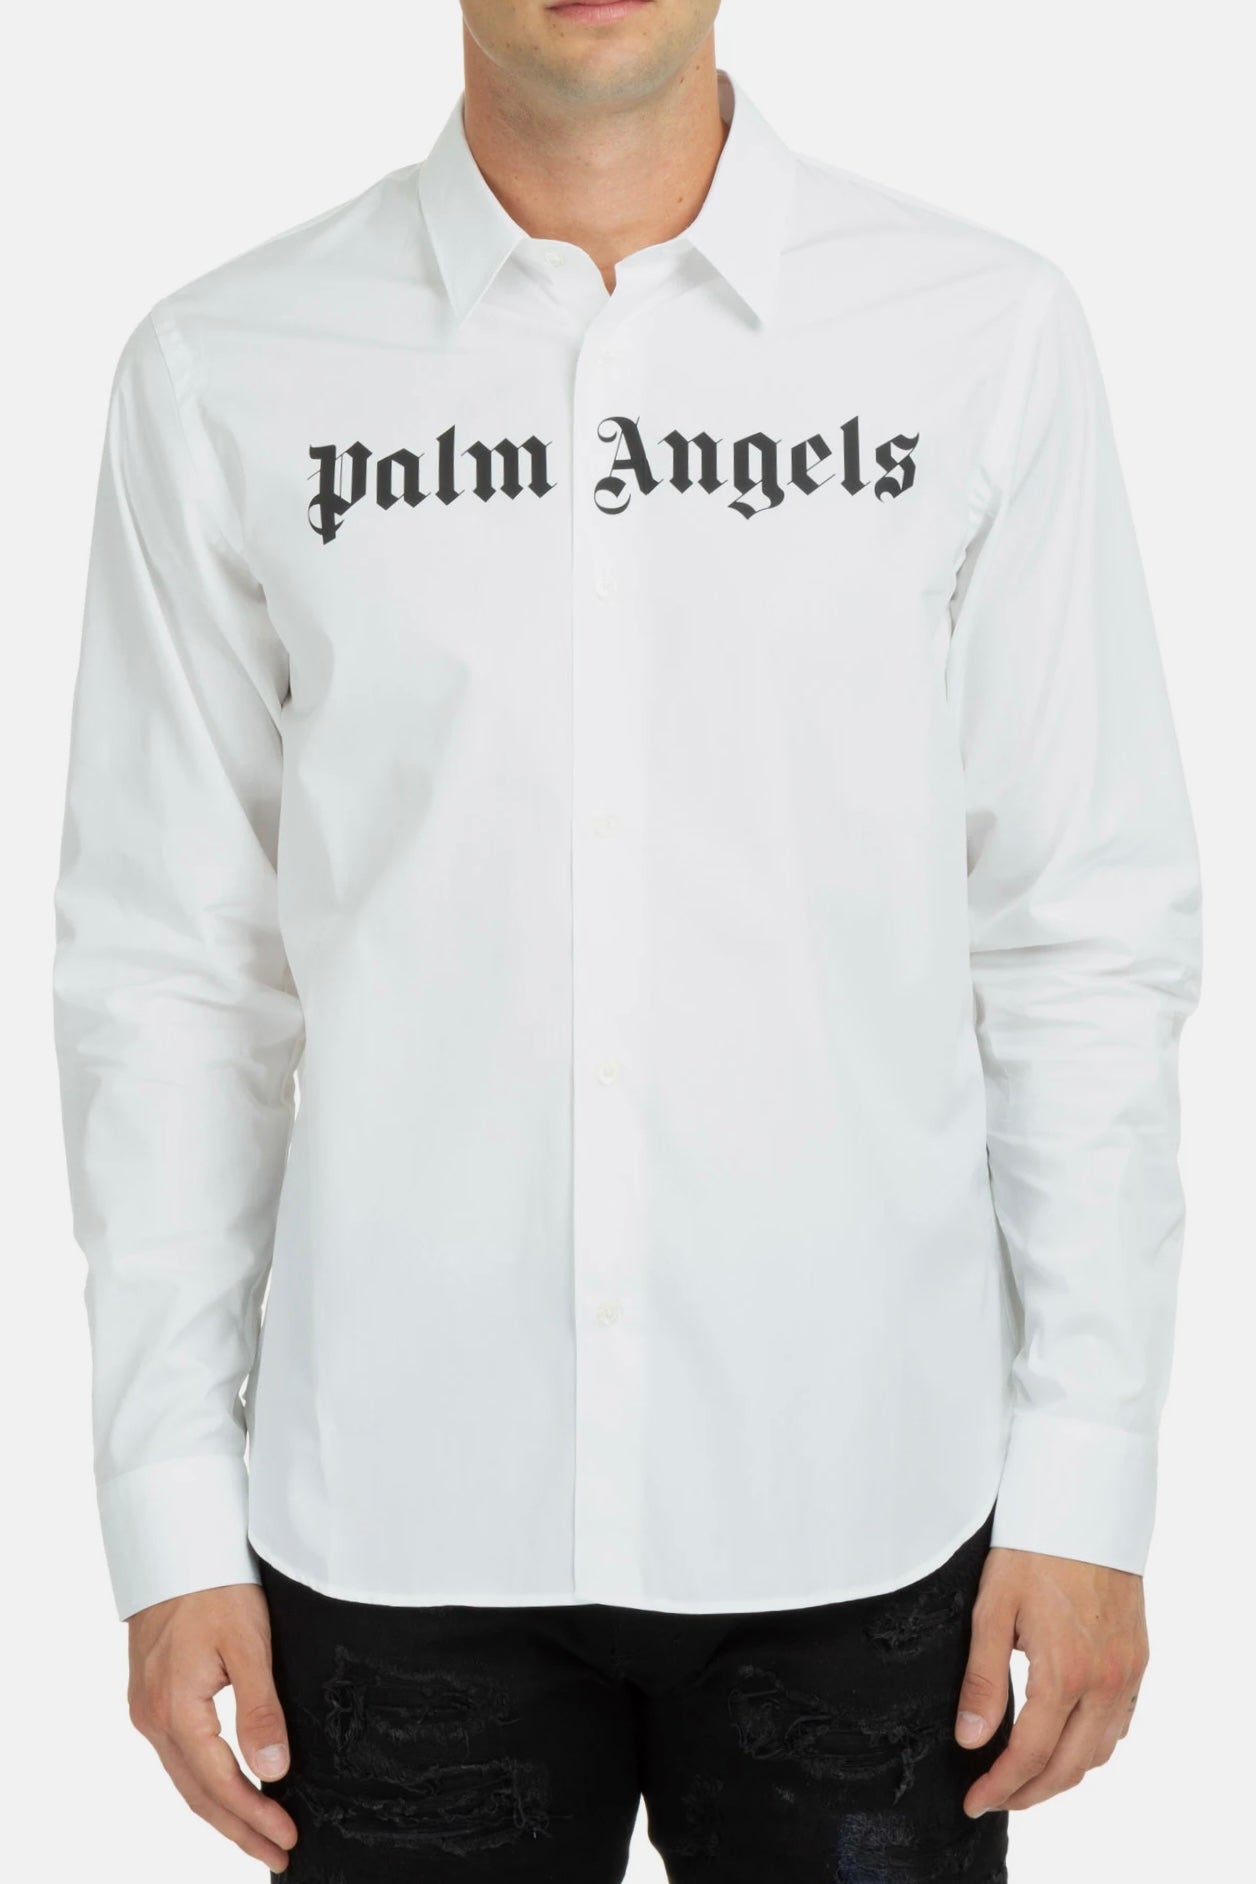 PALM ANGELS-SHIRT